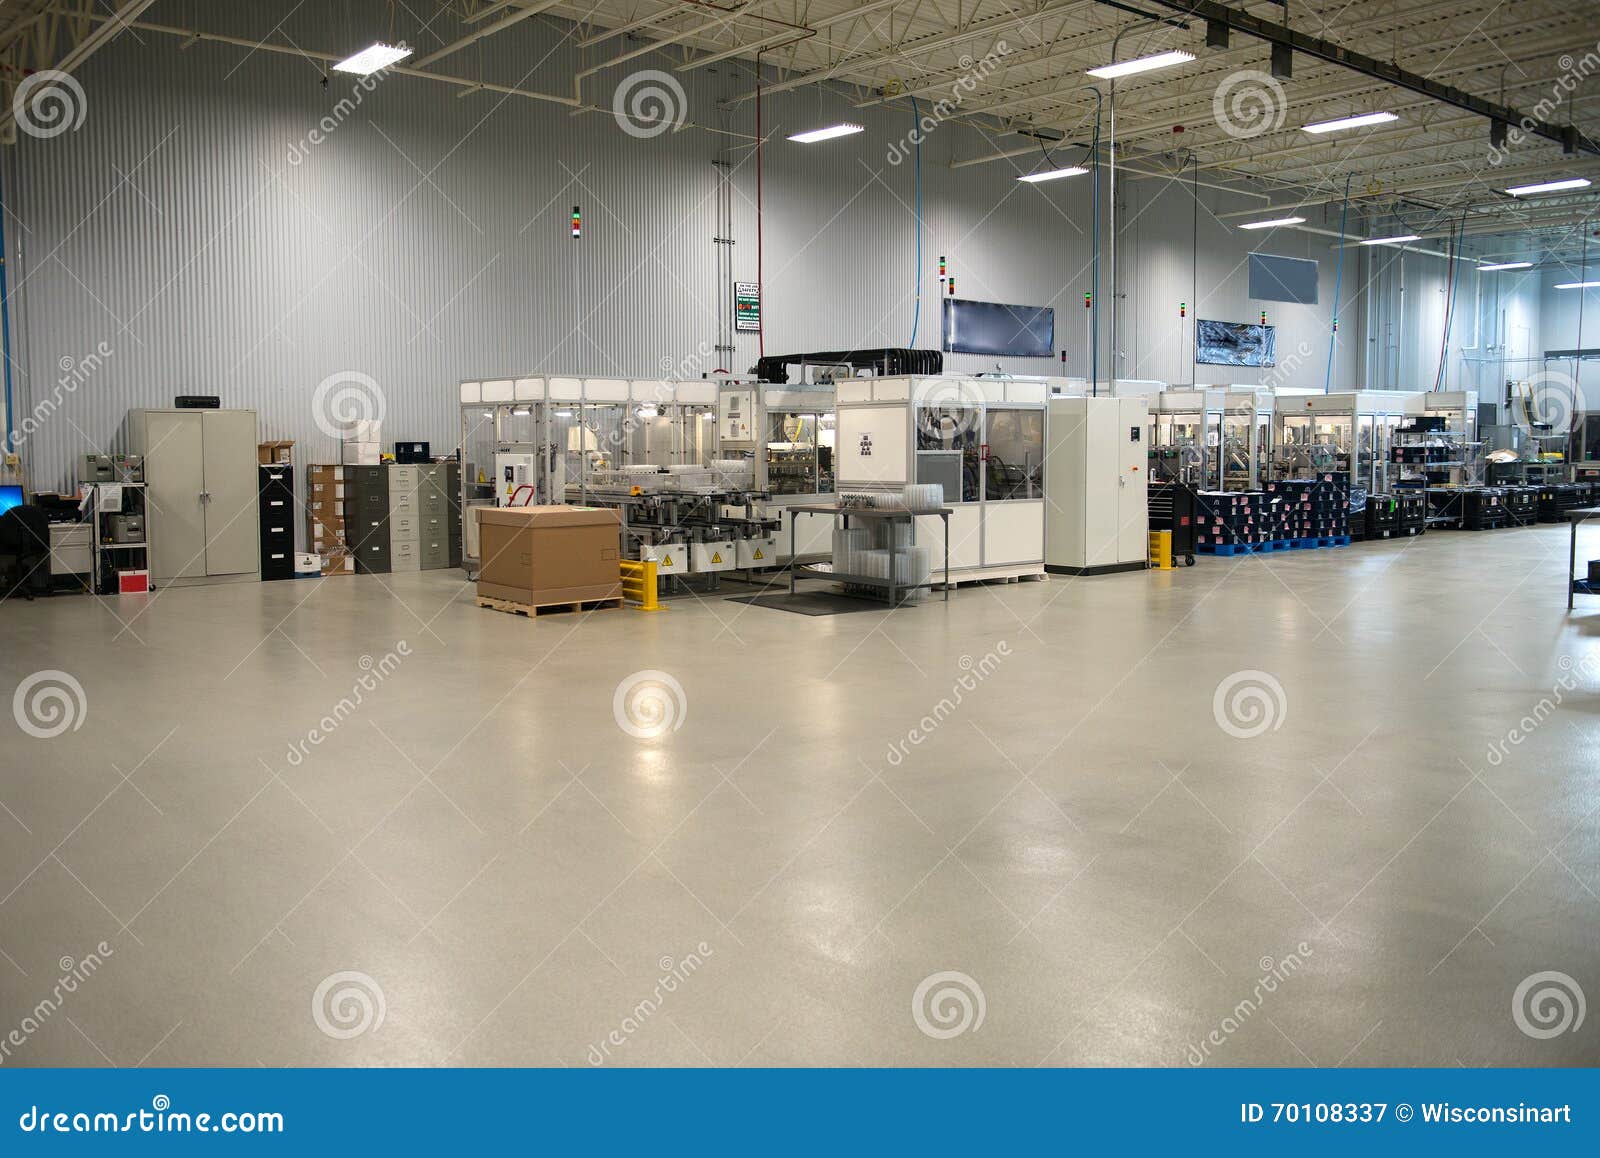 industrial manufacturing factory shop floor